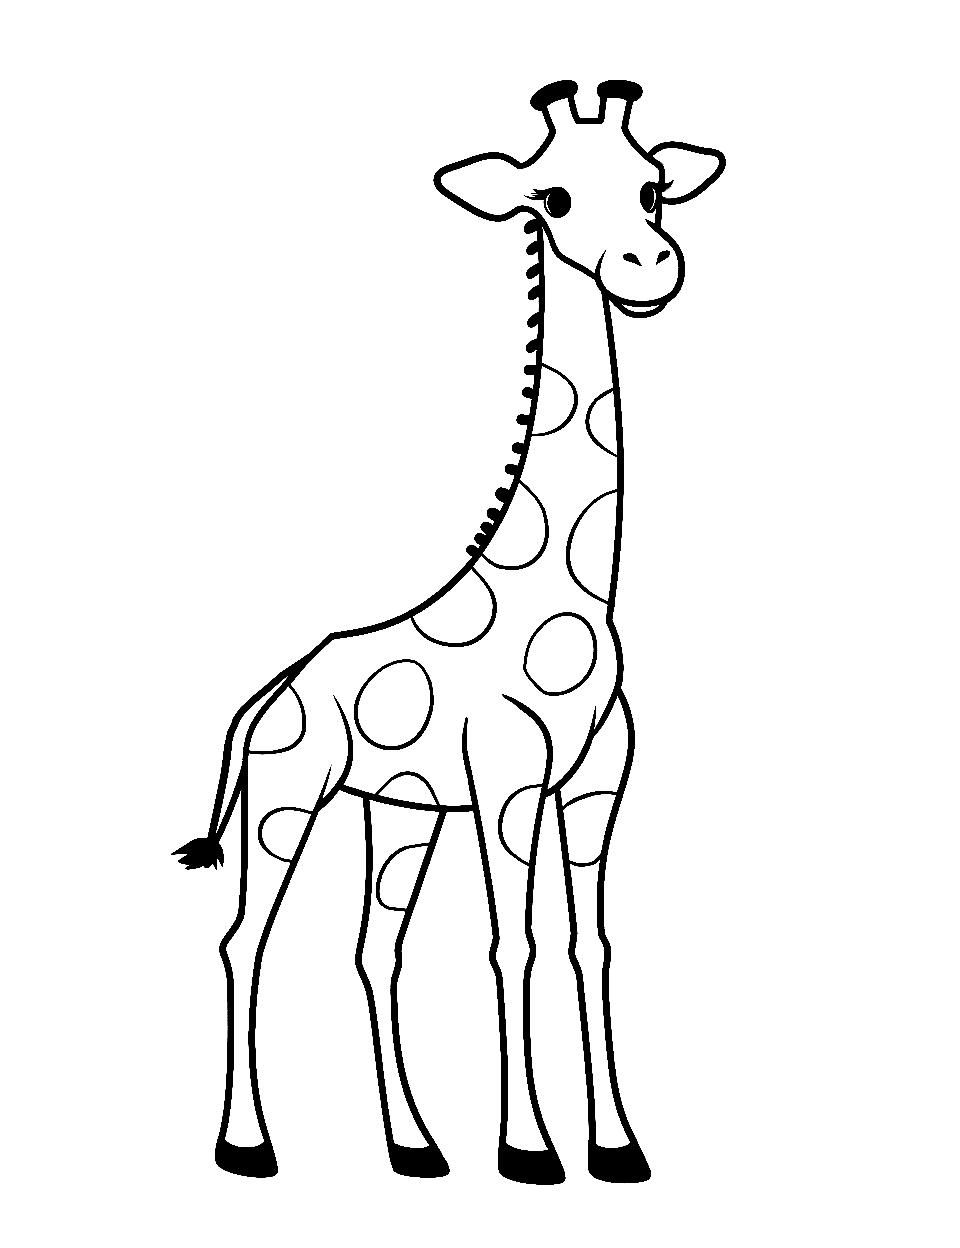 Simple Giraffe Drawing Coloring Page - A minimalist giraffe drawing focusing on basic shapes.